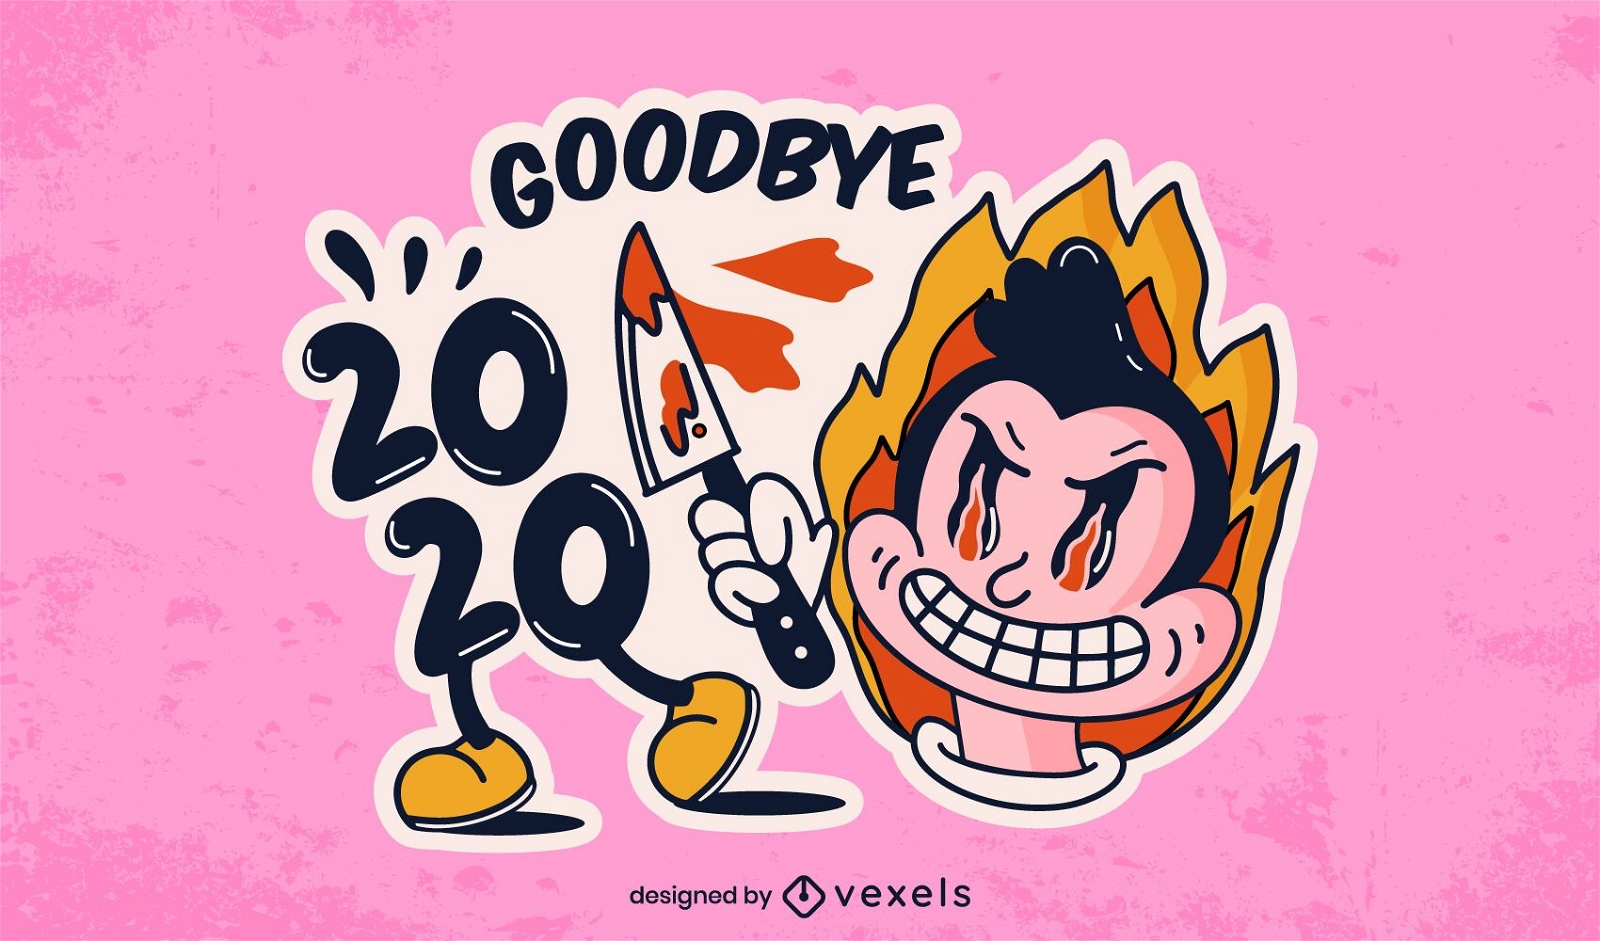 Desenho de ilustra??o de adesivo Goodbye 2020